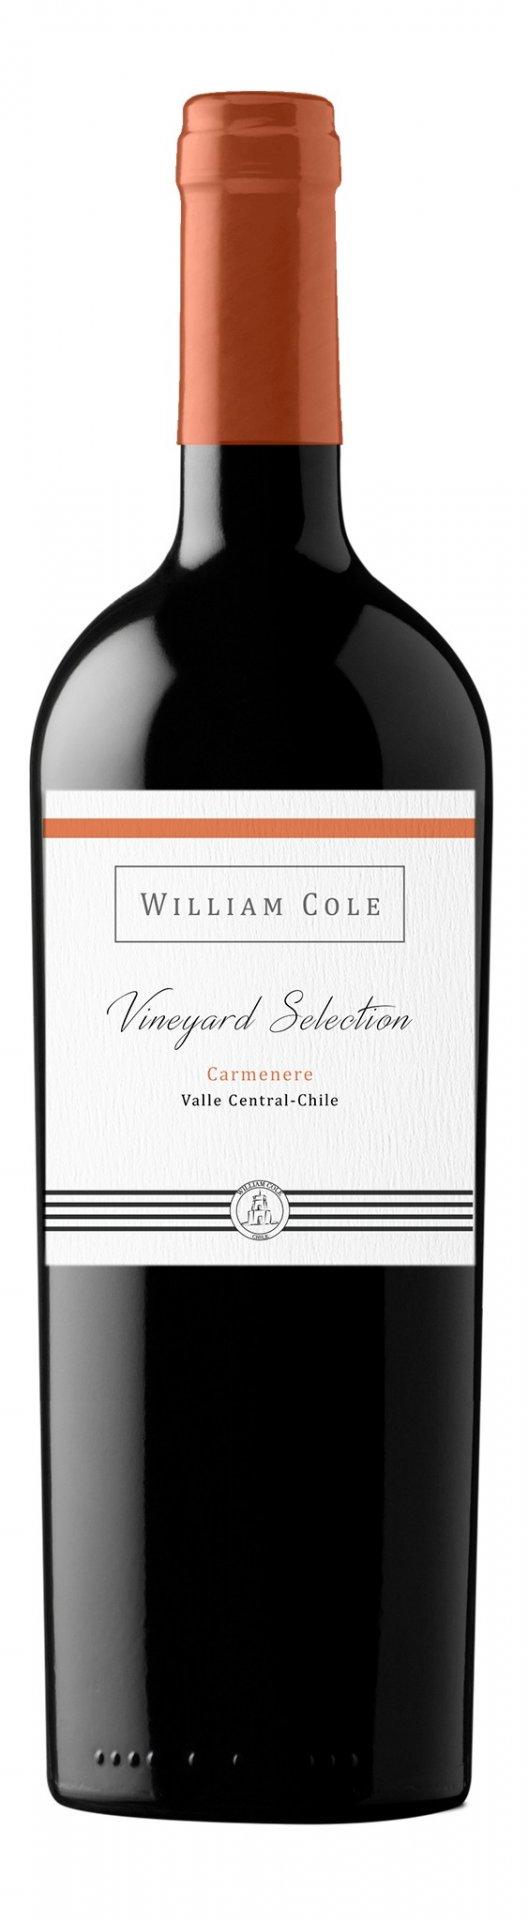 William Cole Vineyard Selection Carmenere